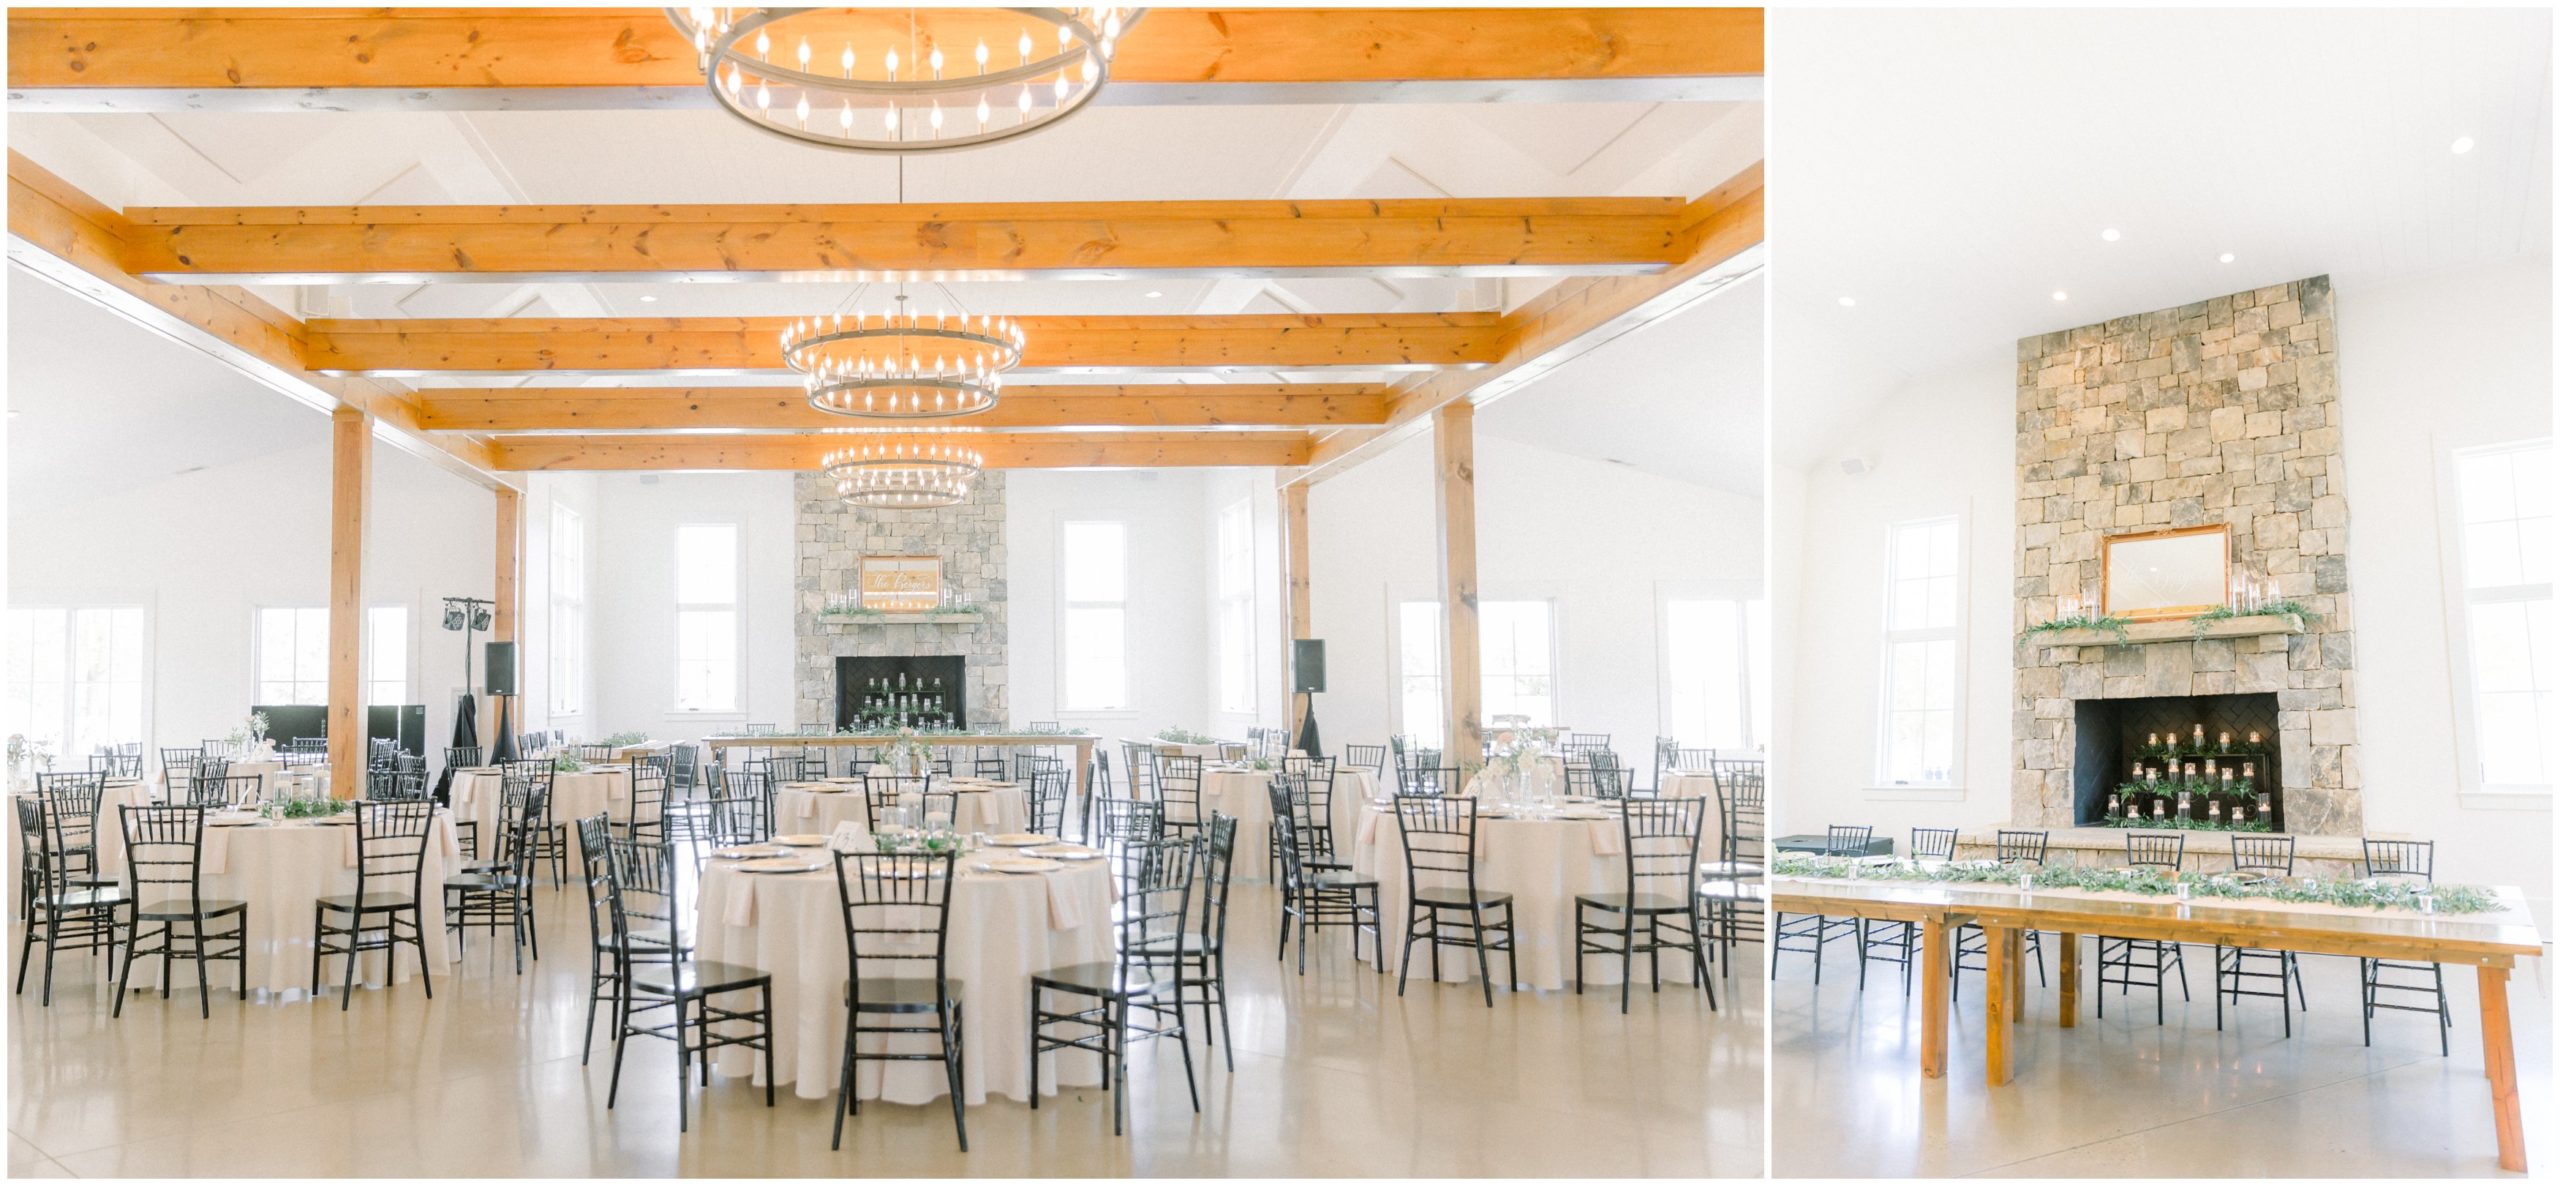 marblegate farm wedding venue highlight by alyssa rachelle photography